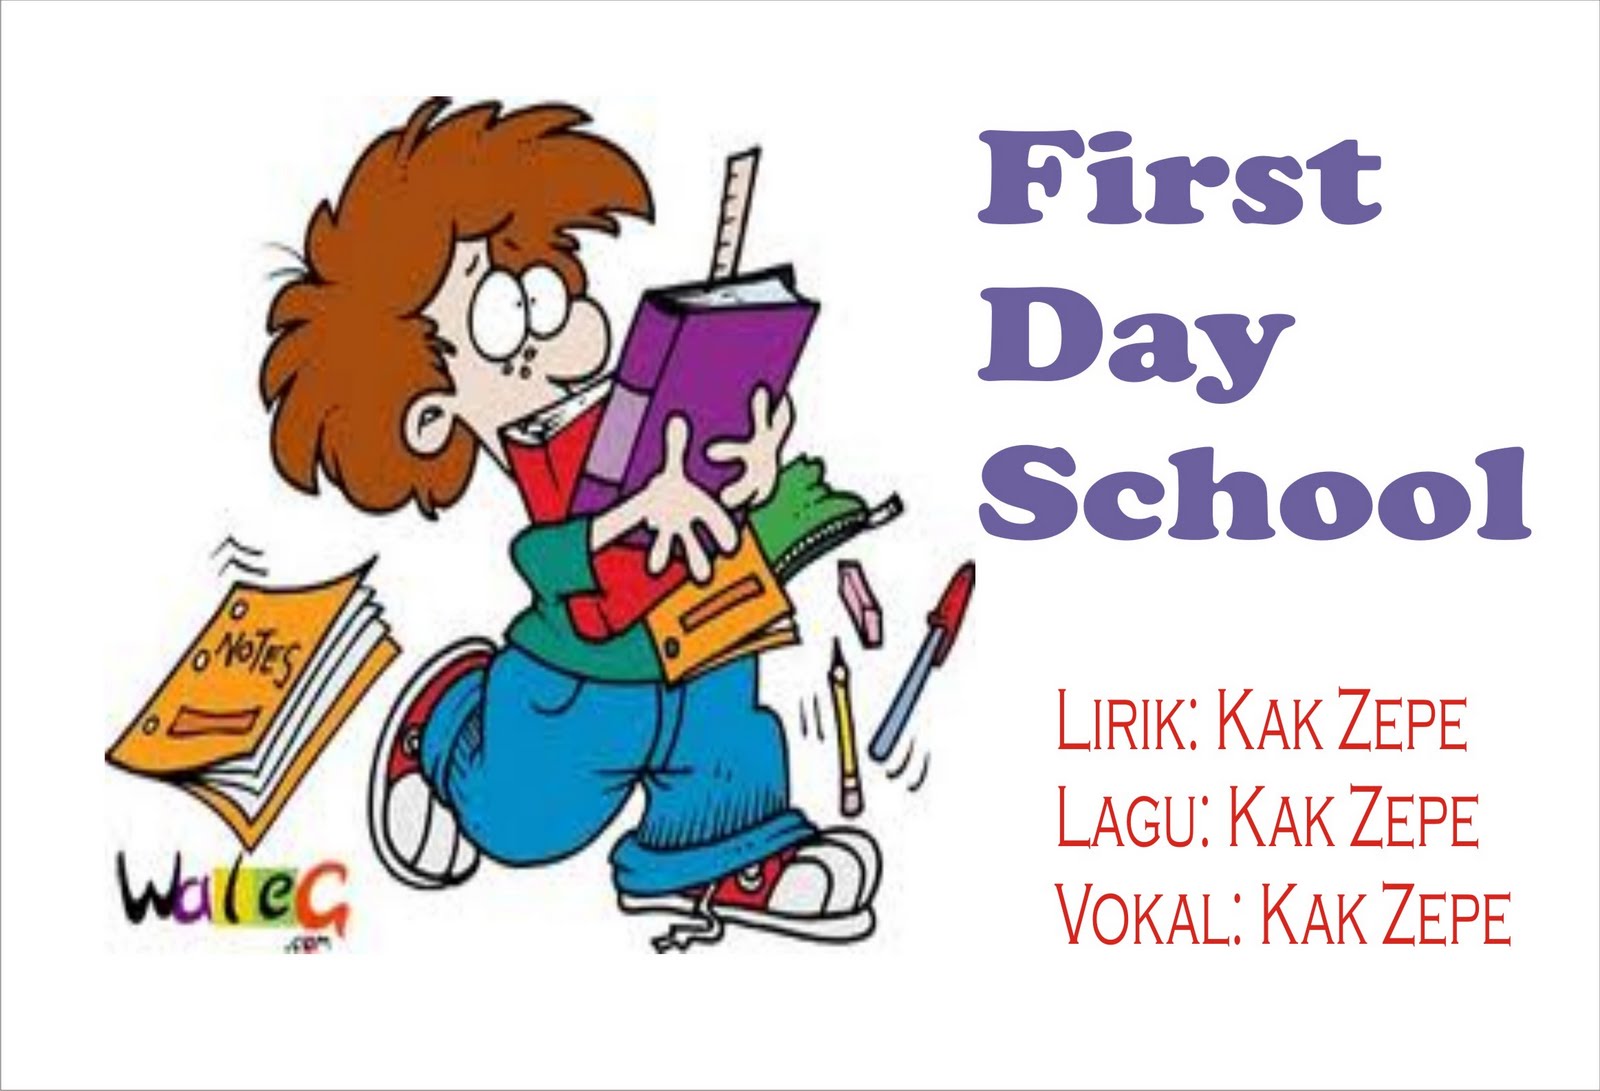 First day school. First Day at School картинки для детей. One School Day. My first Day at School School. This School is Kaka.